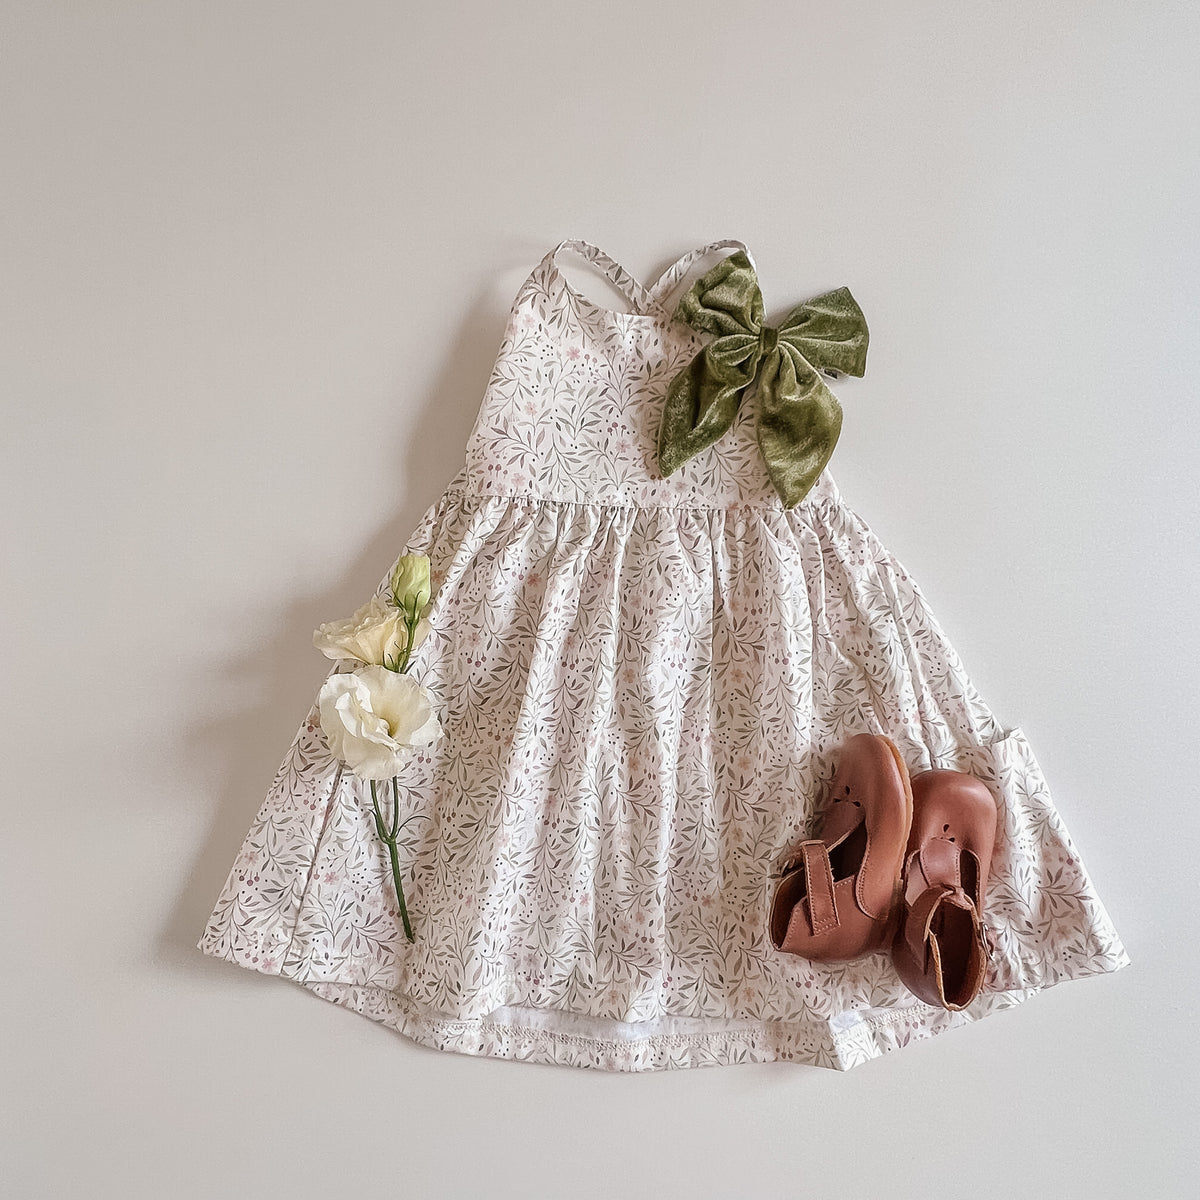 Freya Dress with Market Pockets in 'Little Garden' - Ready To Ship